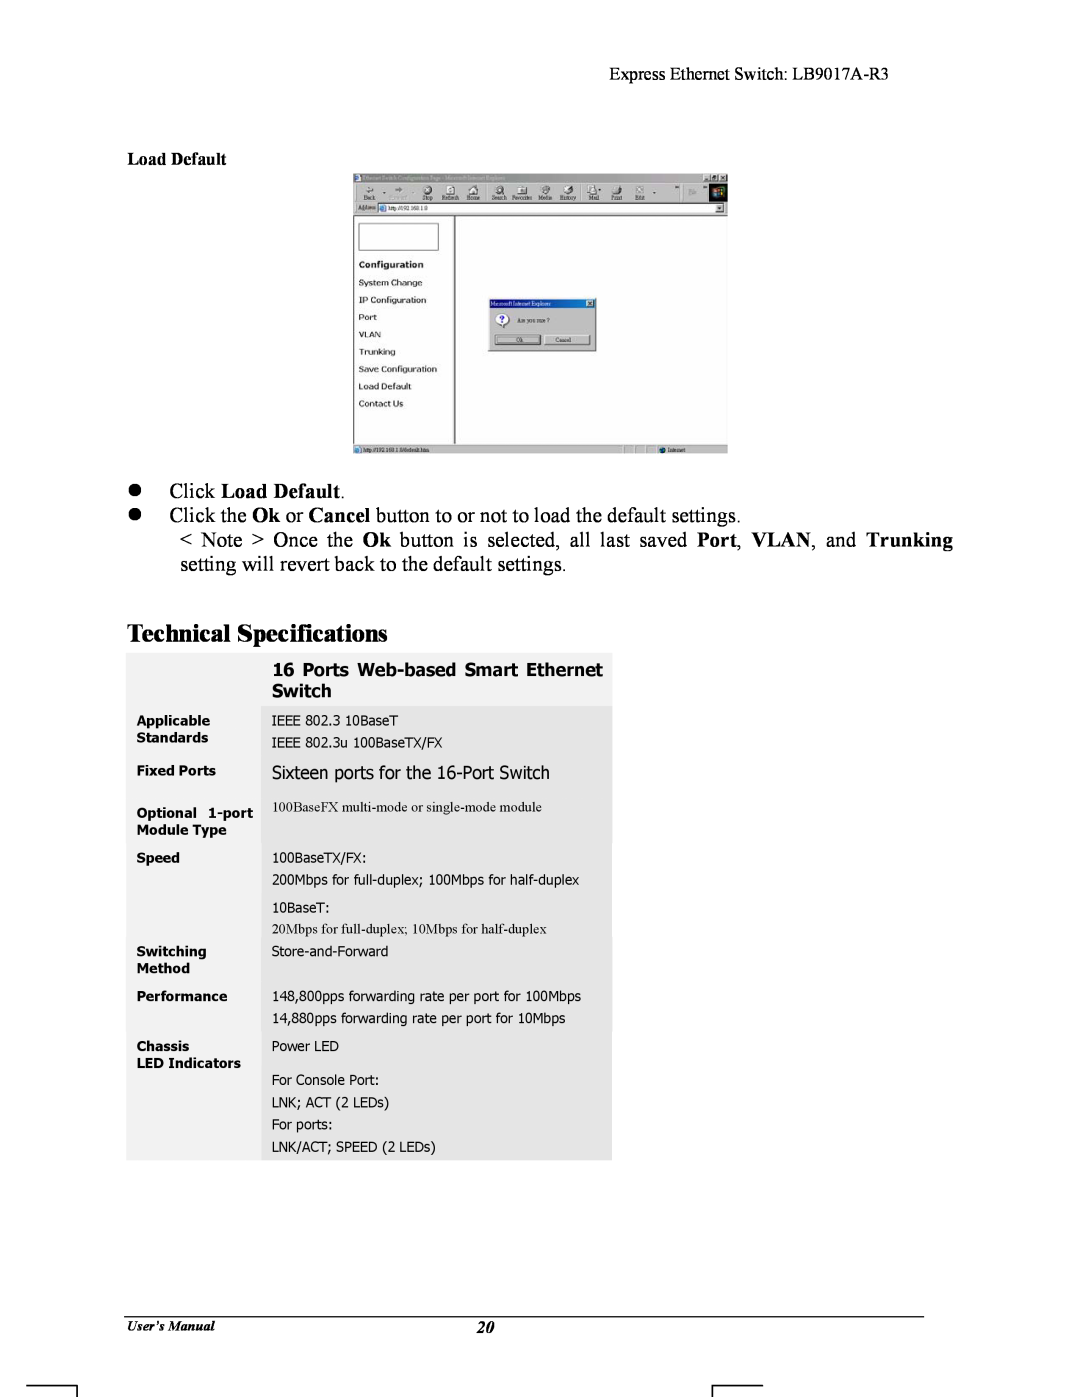 Black Box LB9017A-R3 manual Technical Specifications, zClick Load Default 